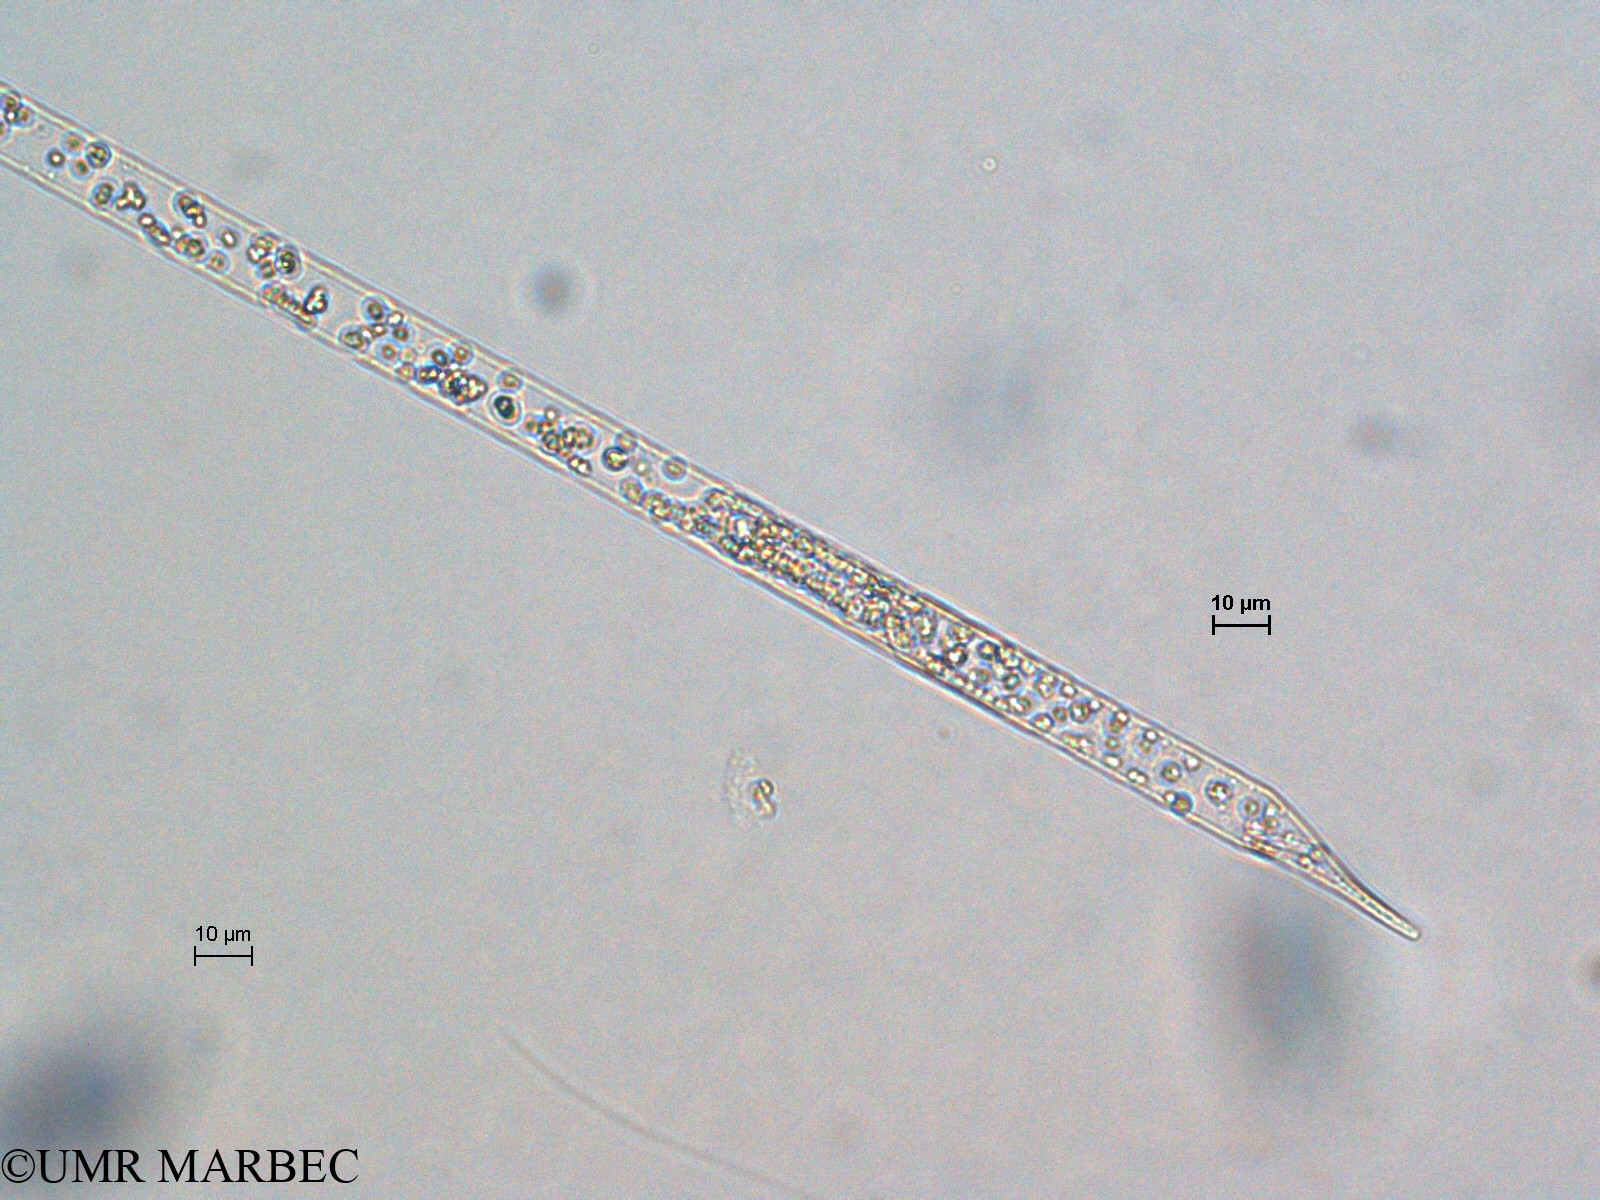 phyto/Scattered_Islands/all/COMMA April 2011/Proboscia alata (ancien Rhizosolenia sp3 -1)(copy).jpg